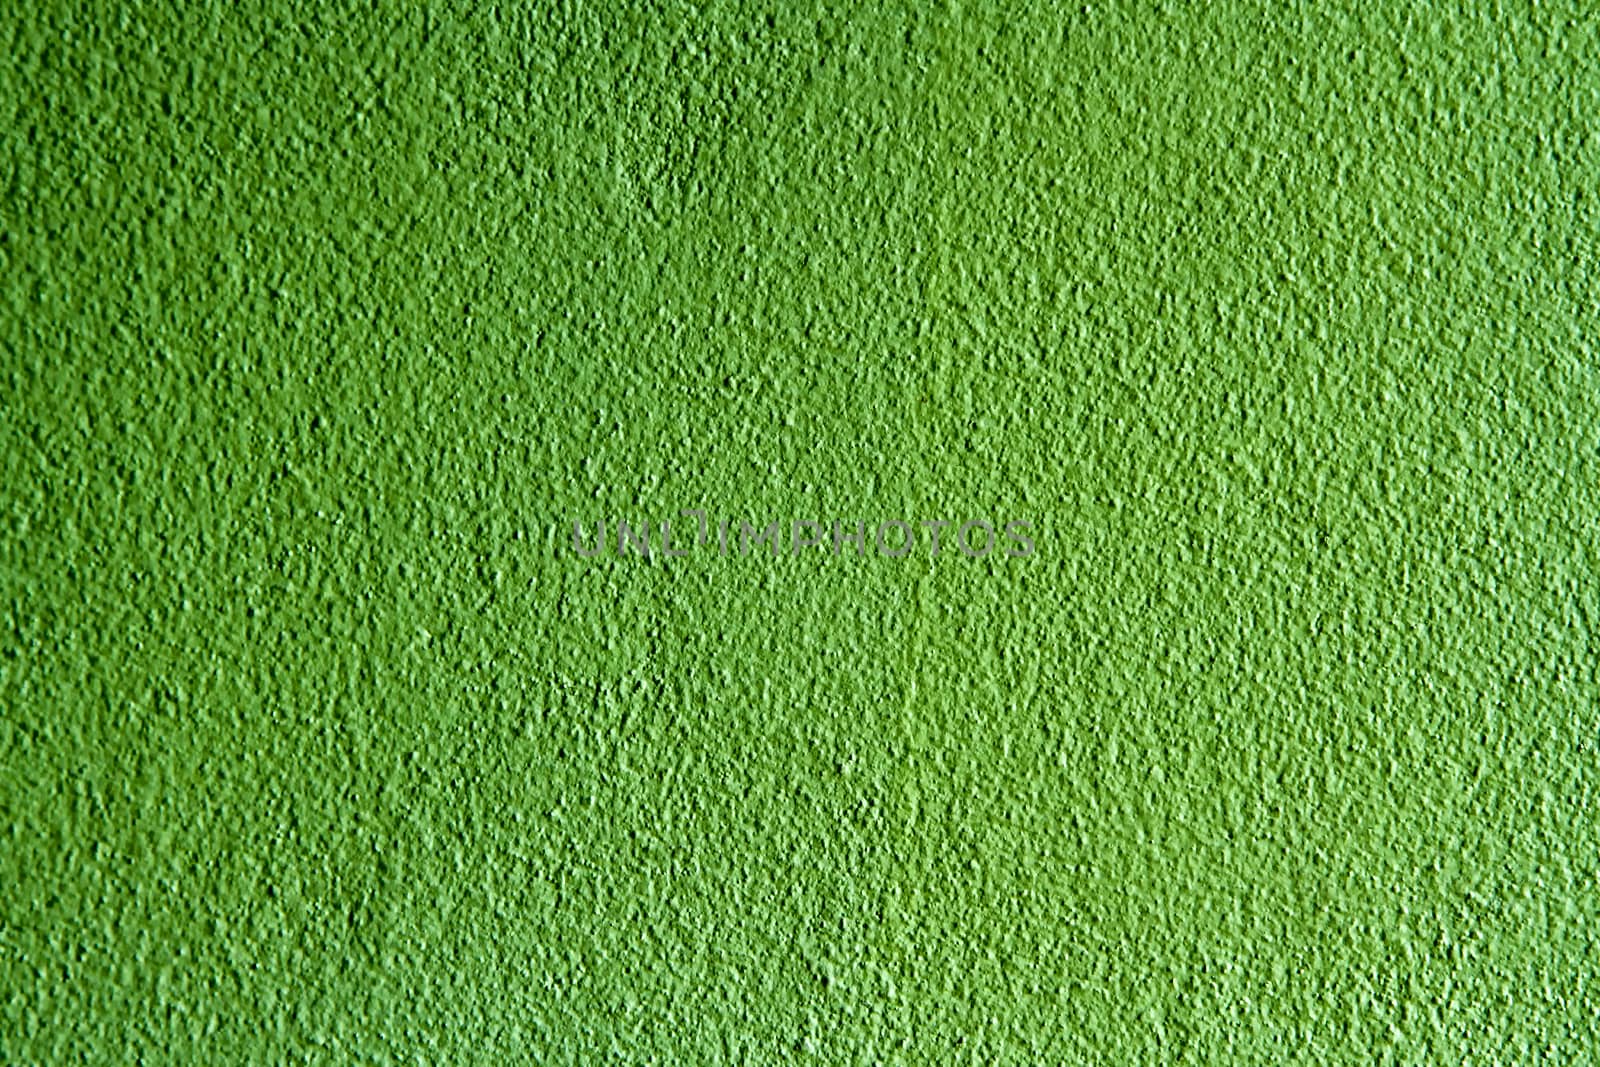 Green cement floor dark for background by TakerWalker